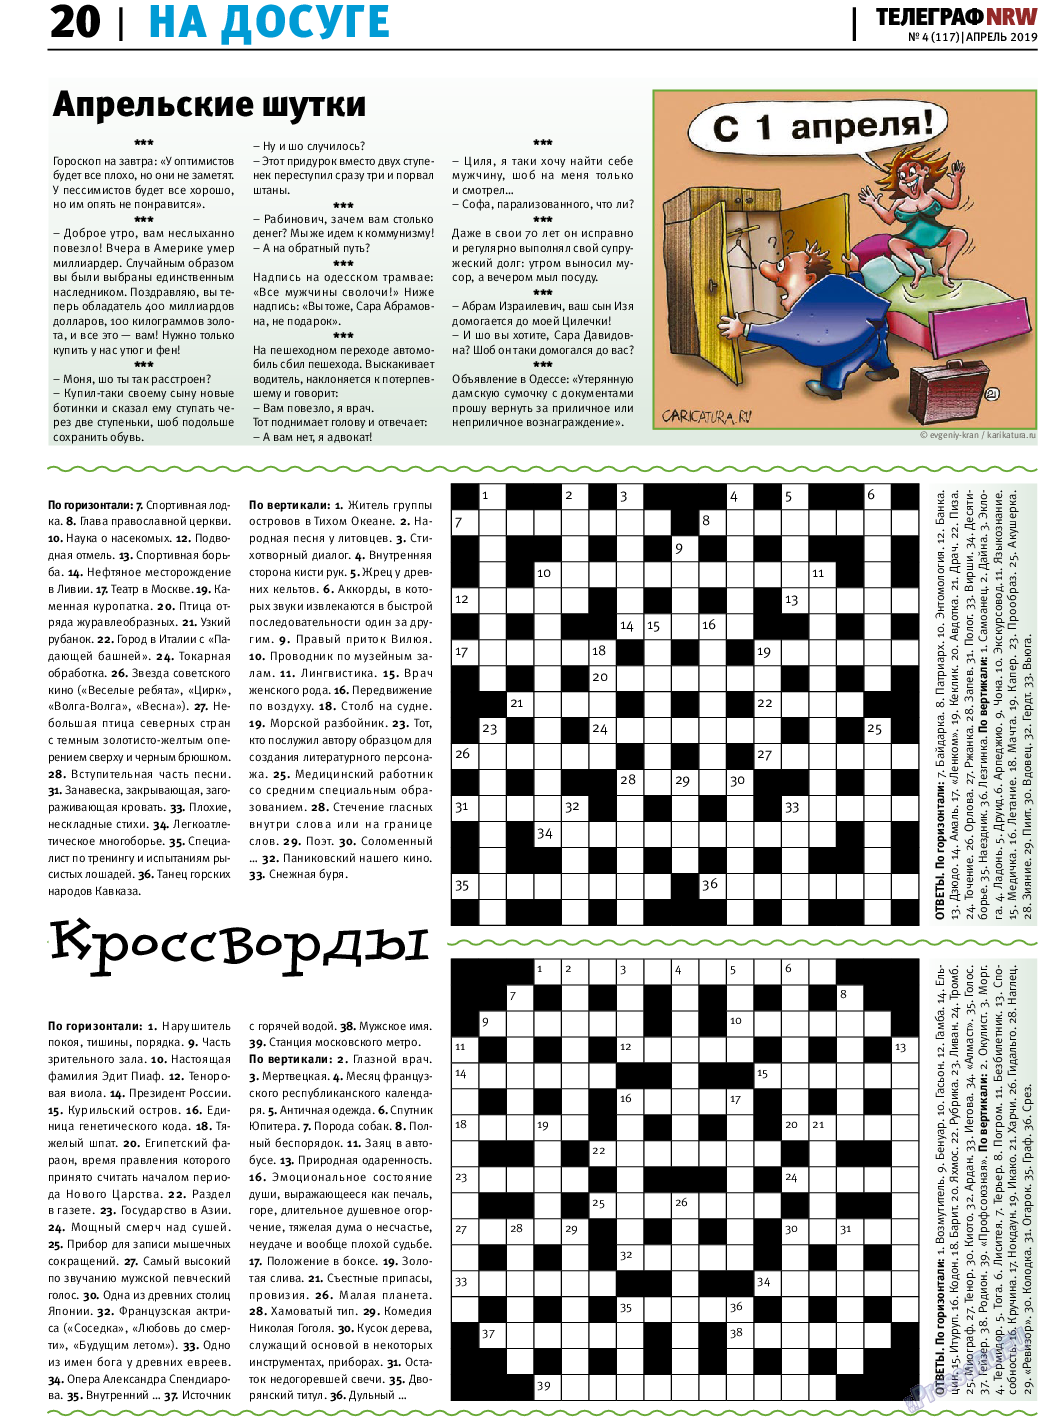 Телеграф NRW, газета. 2019 №4 стр.20